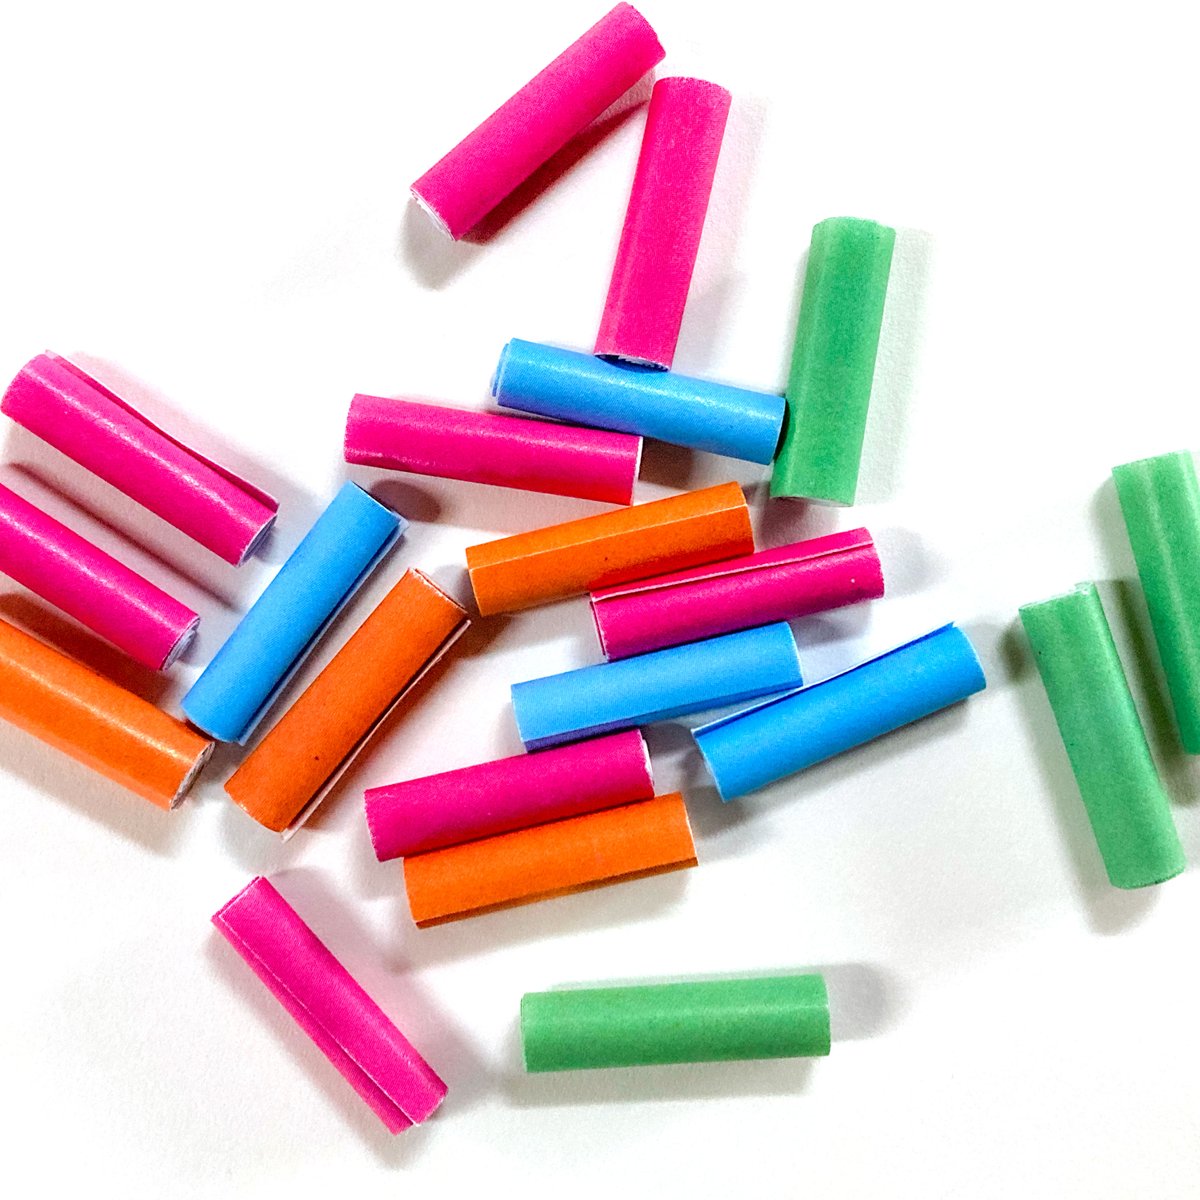 the confetti crutch 🎉

#confetti #color #new #colorful #varietypack #smokepretty #burnbabyburn #green #pink #blue #Orange